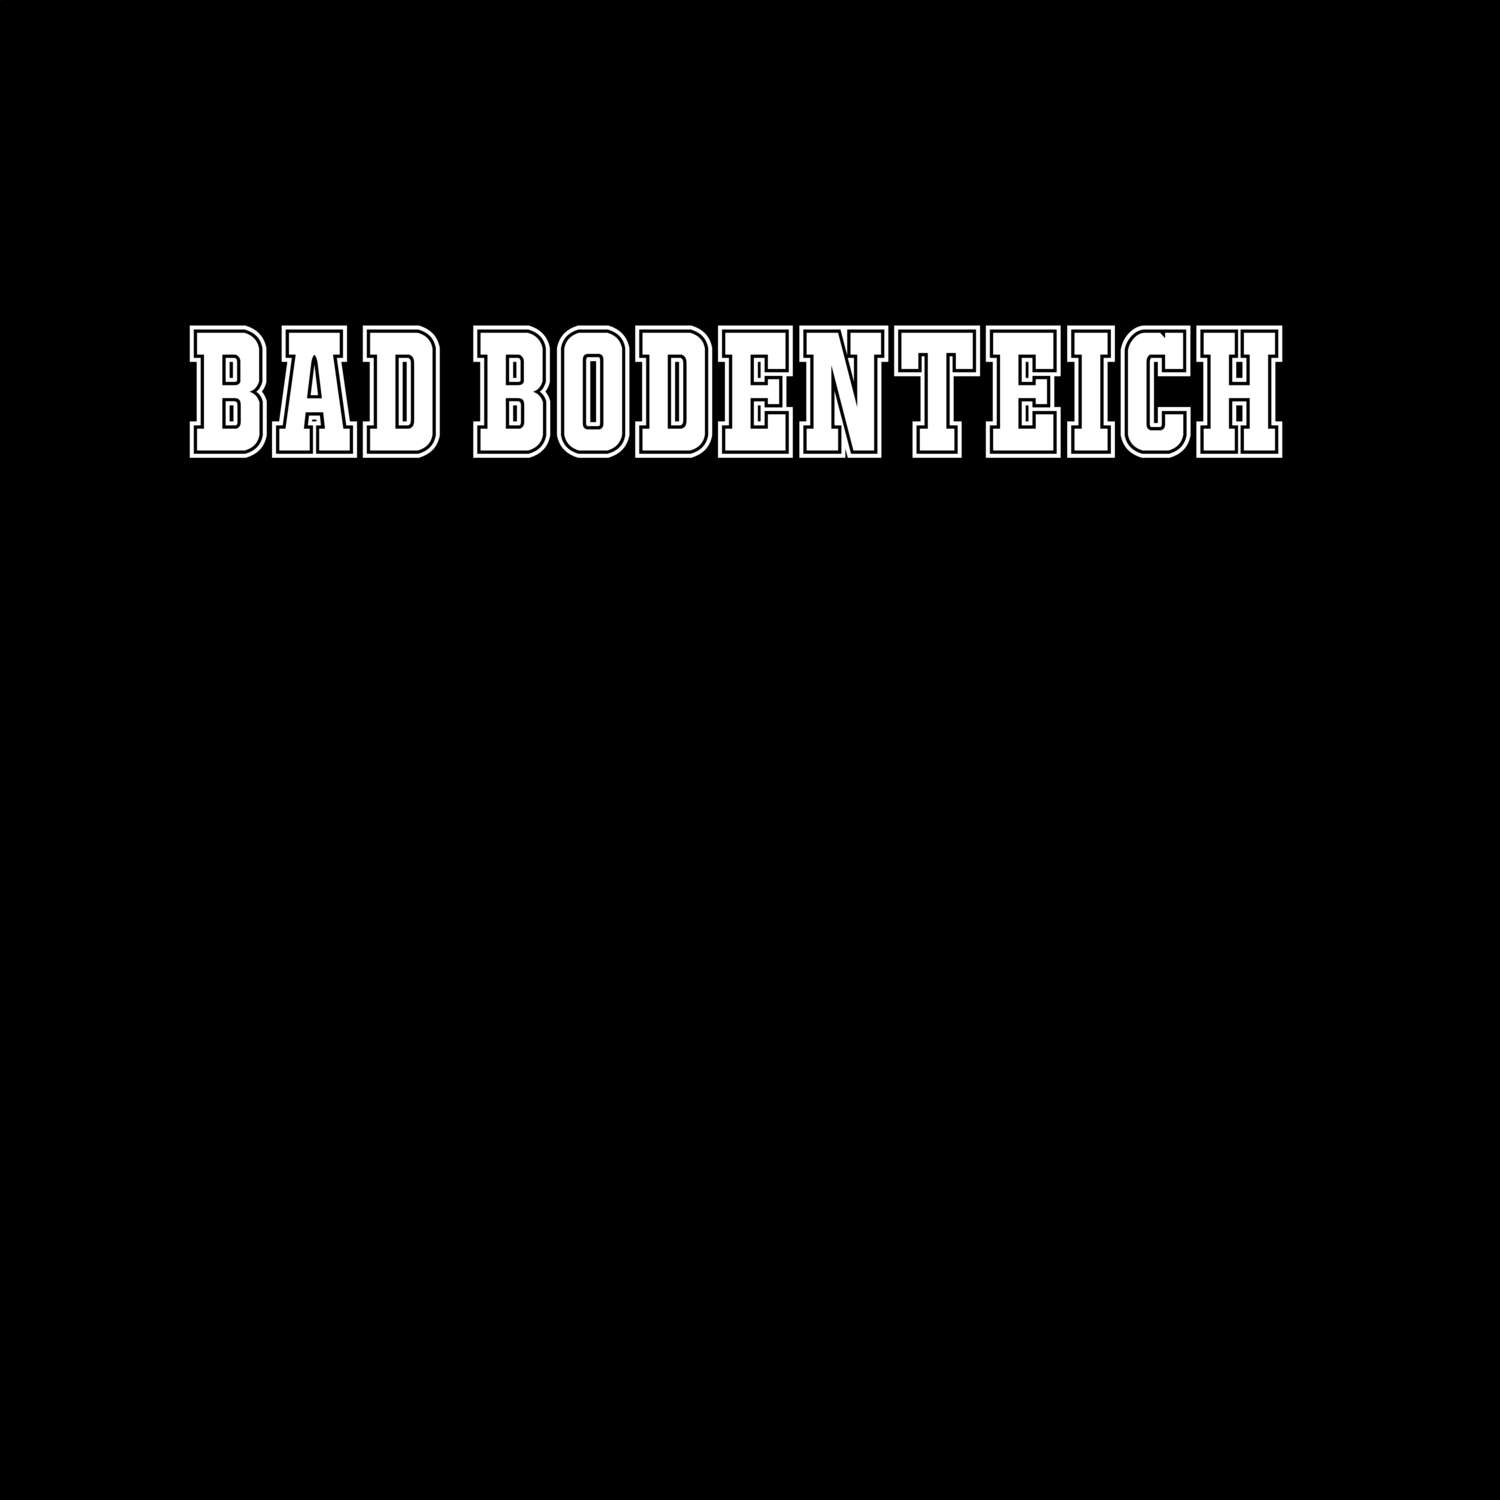 Bad Bodenteich T-Shirt »Classic«